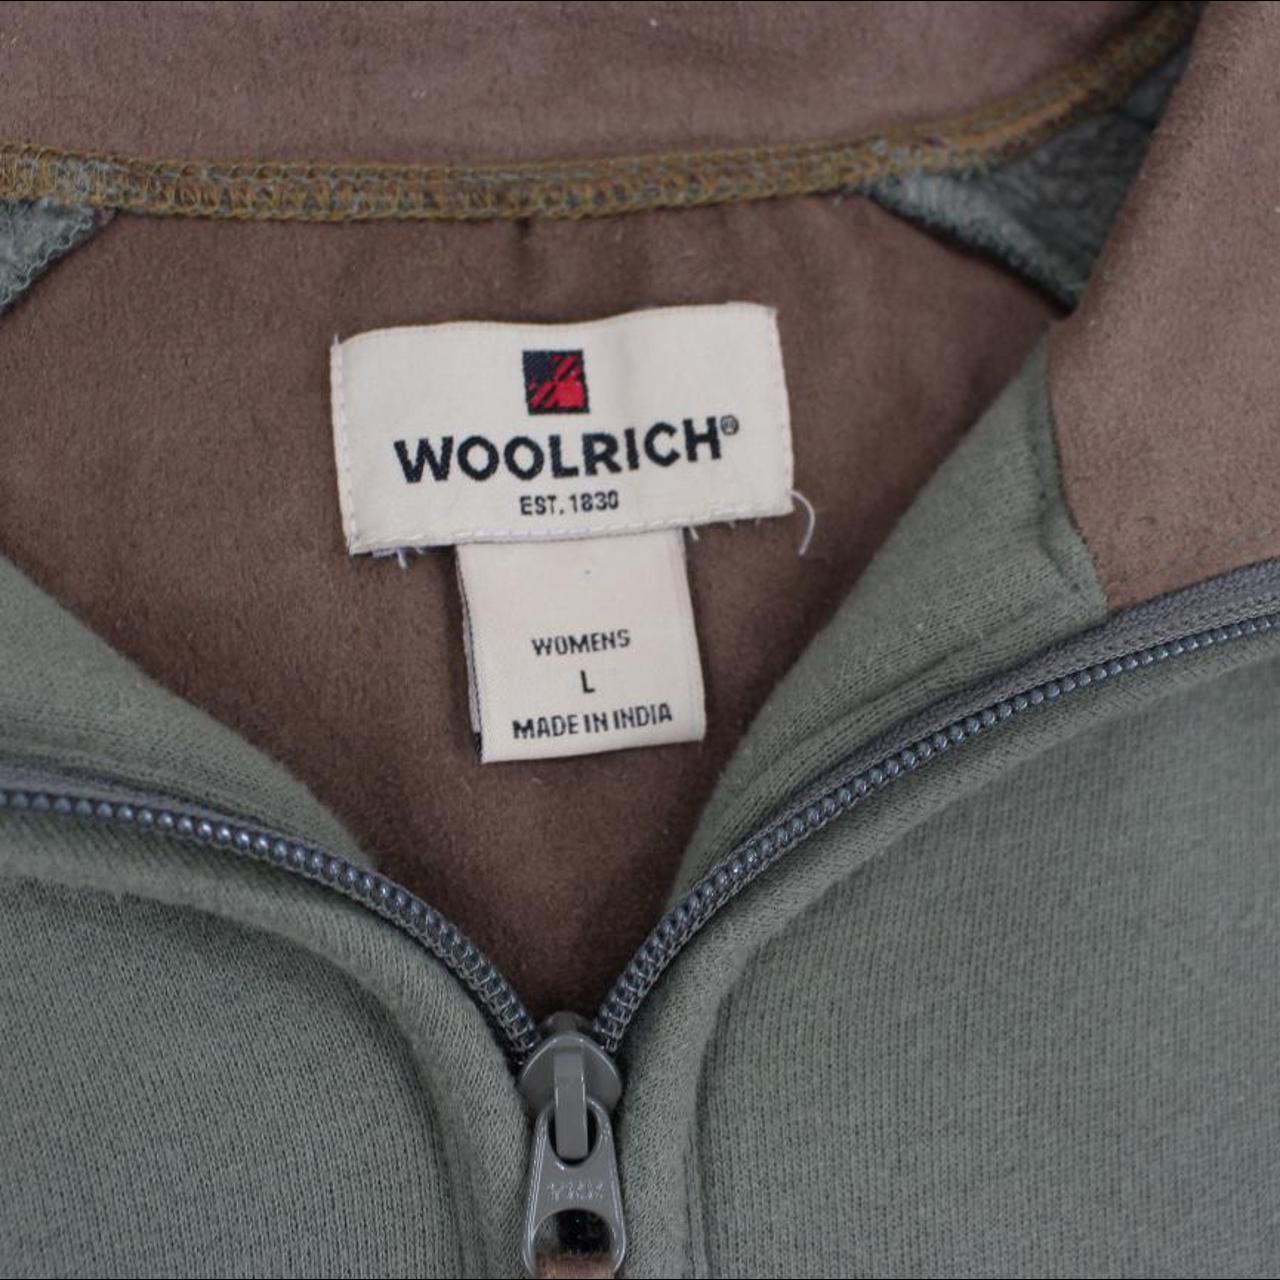 Product Image 4 - Woolrich quarter zip sweatshirt 🔥

The